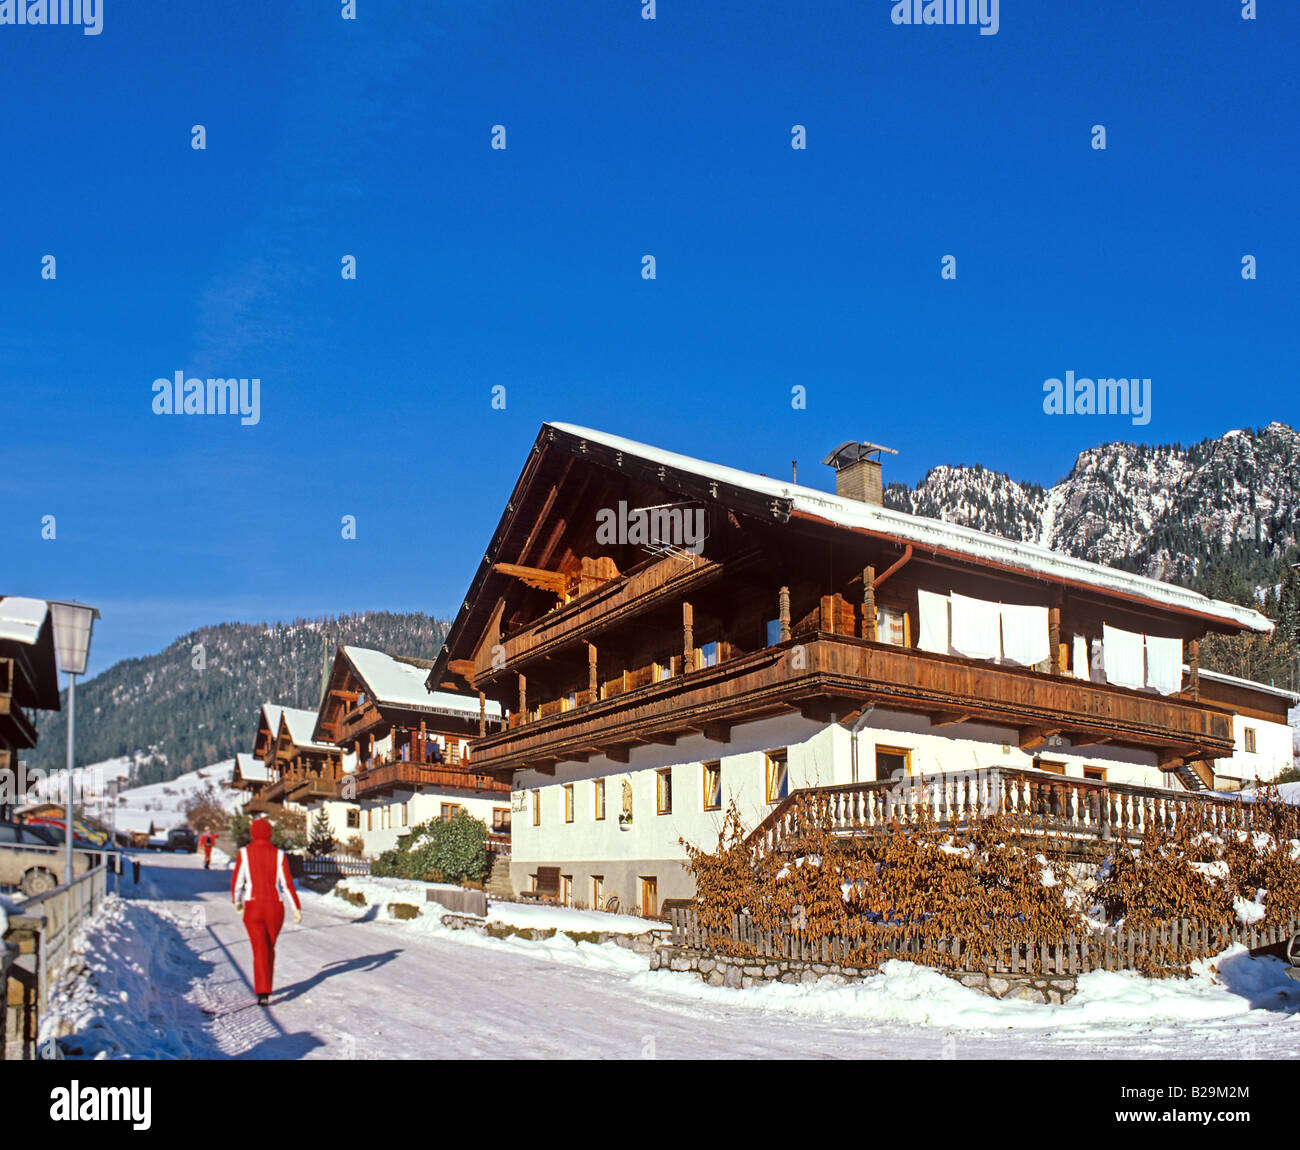 Alpbach Tirol Austria Ref WP STRANGE 3567 COMPULSORY CREDIT World Pictures Photoshot Stock Photo